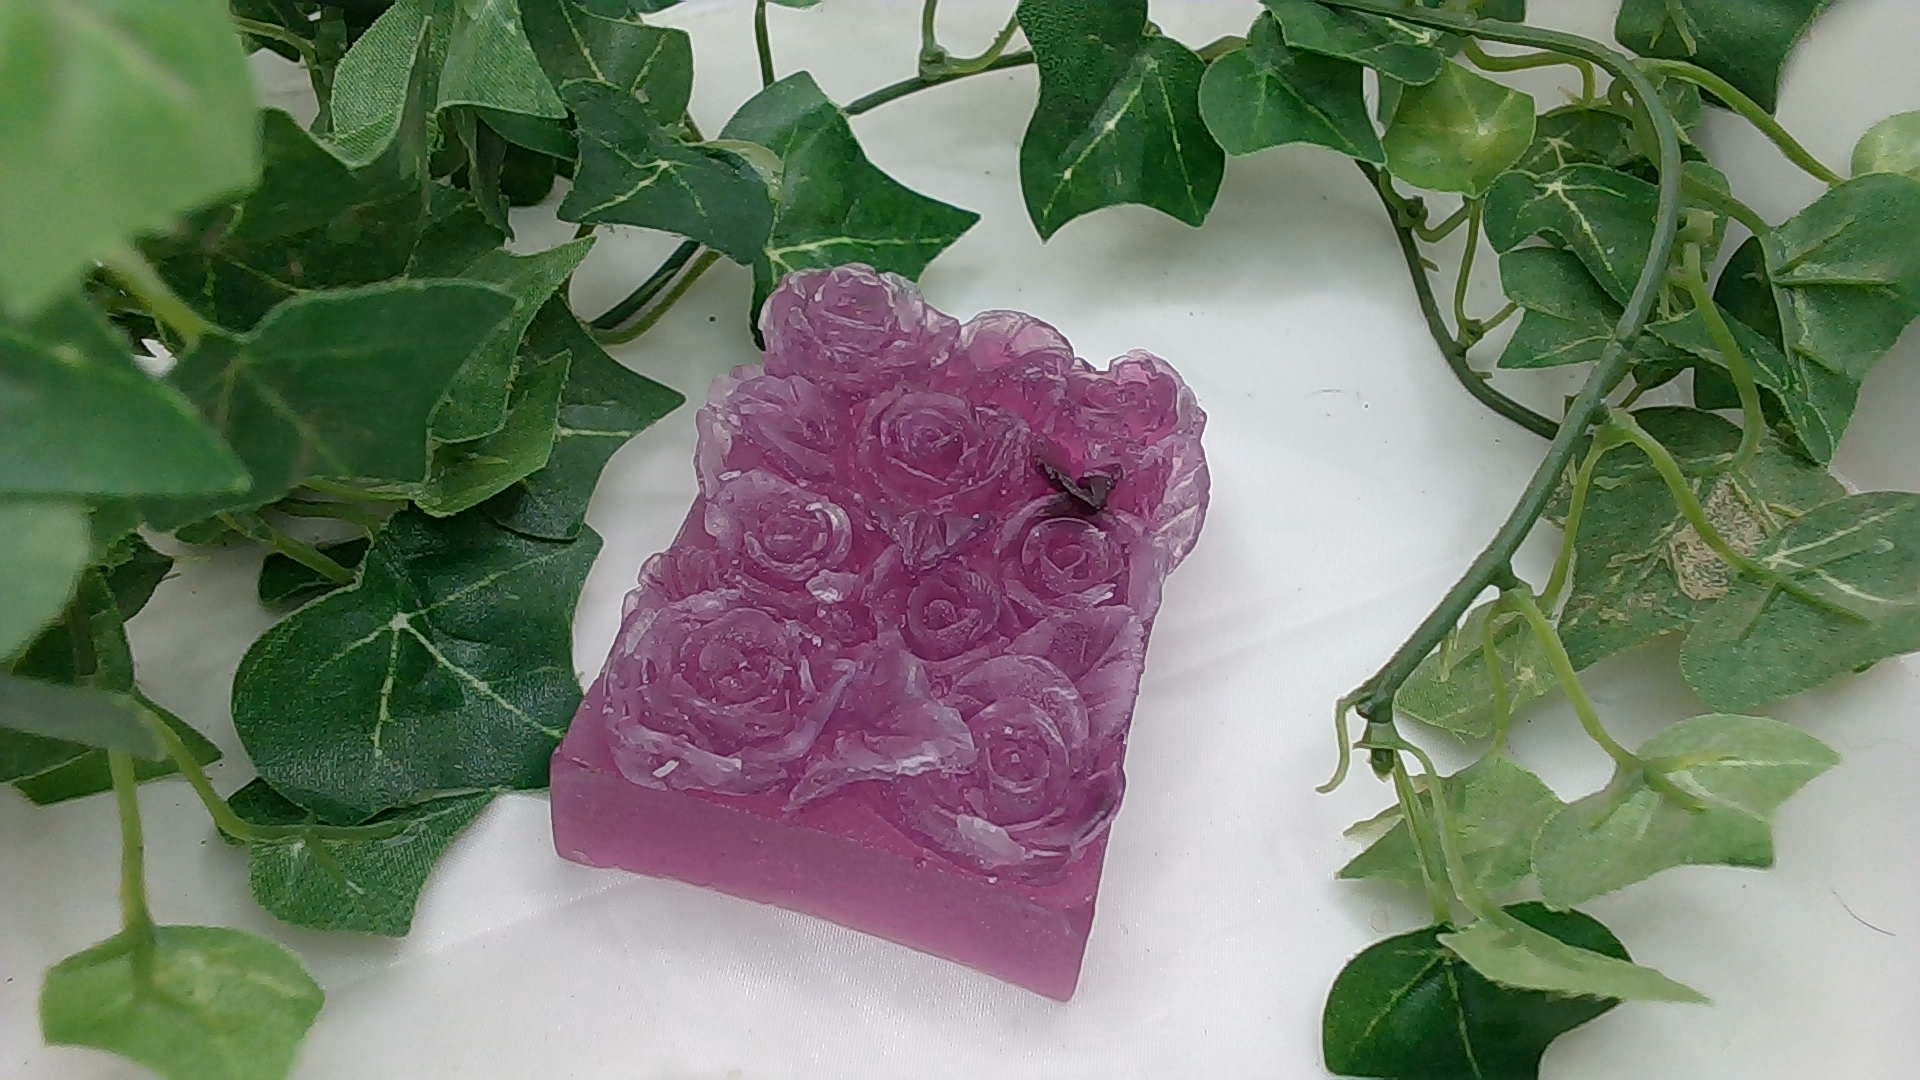 Geranium infused in Rose Glycerin Soap